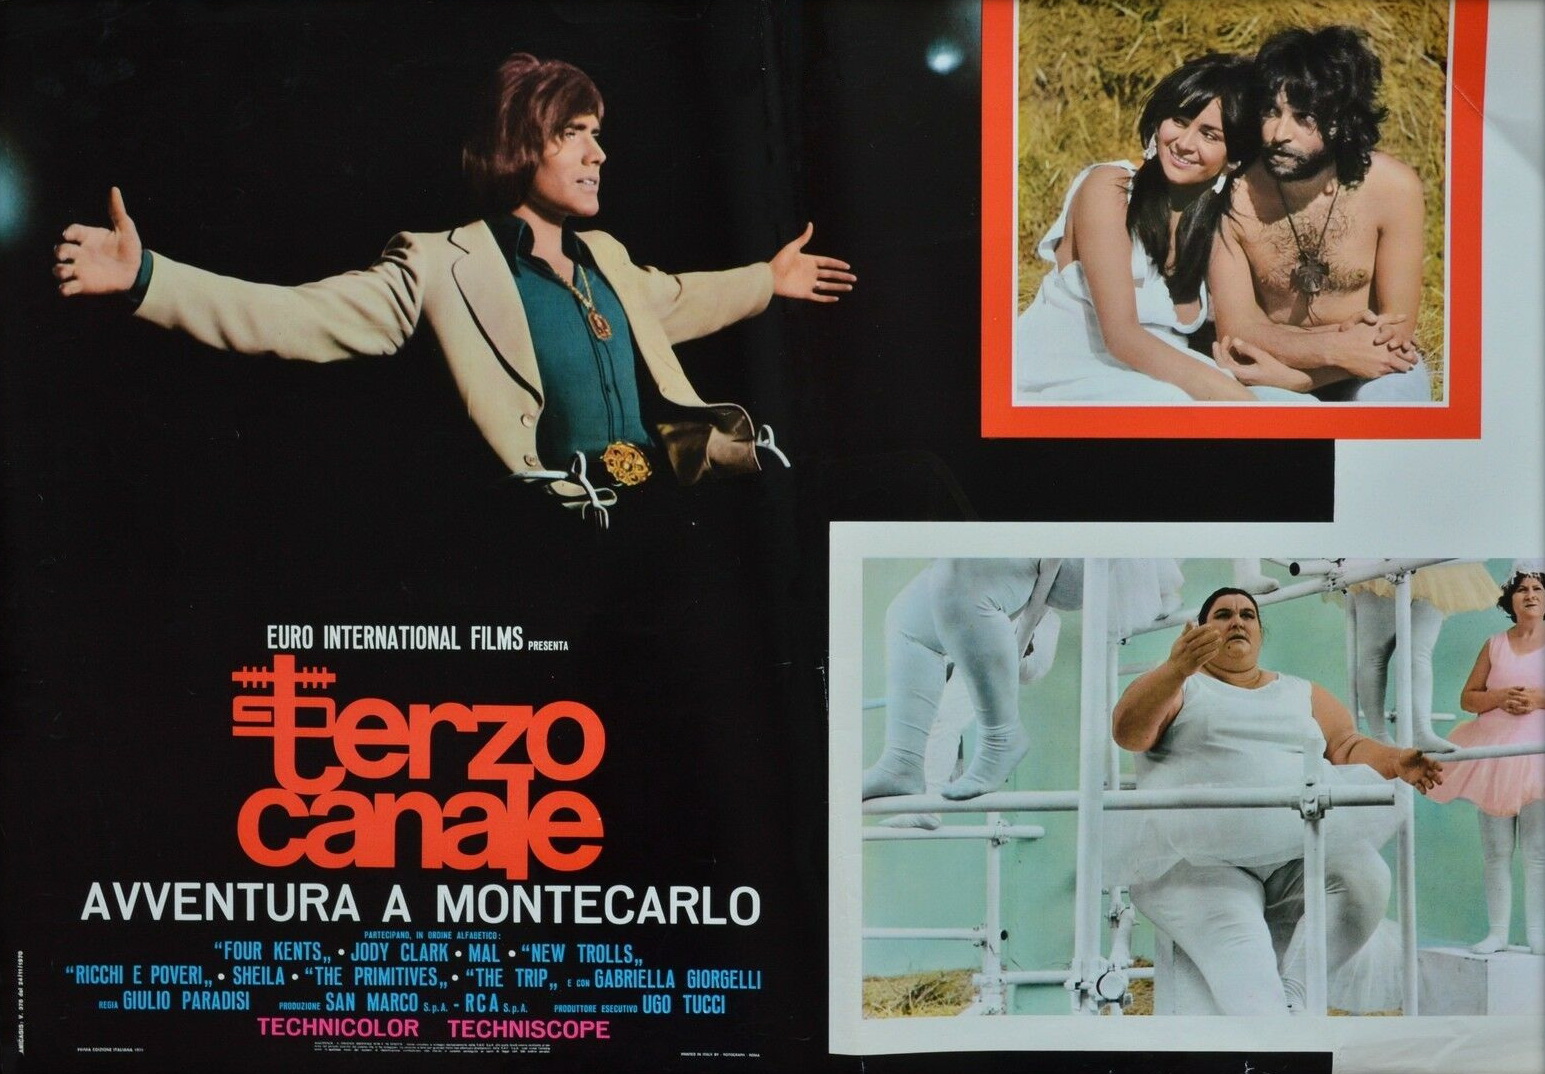 Terzo canale - Avventura a Montecarlo (1970) Screenshot 1